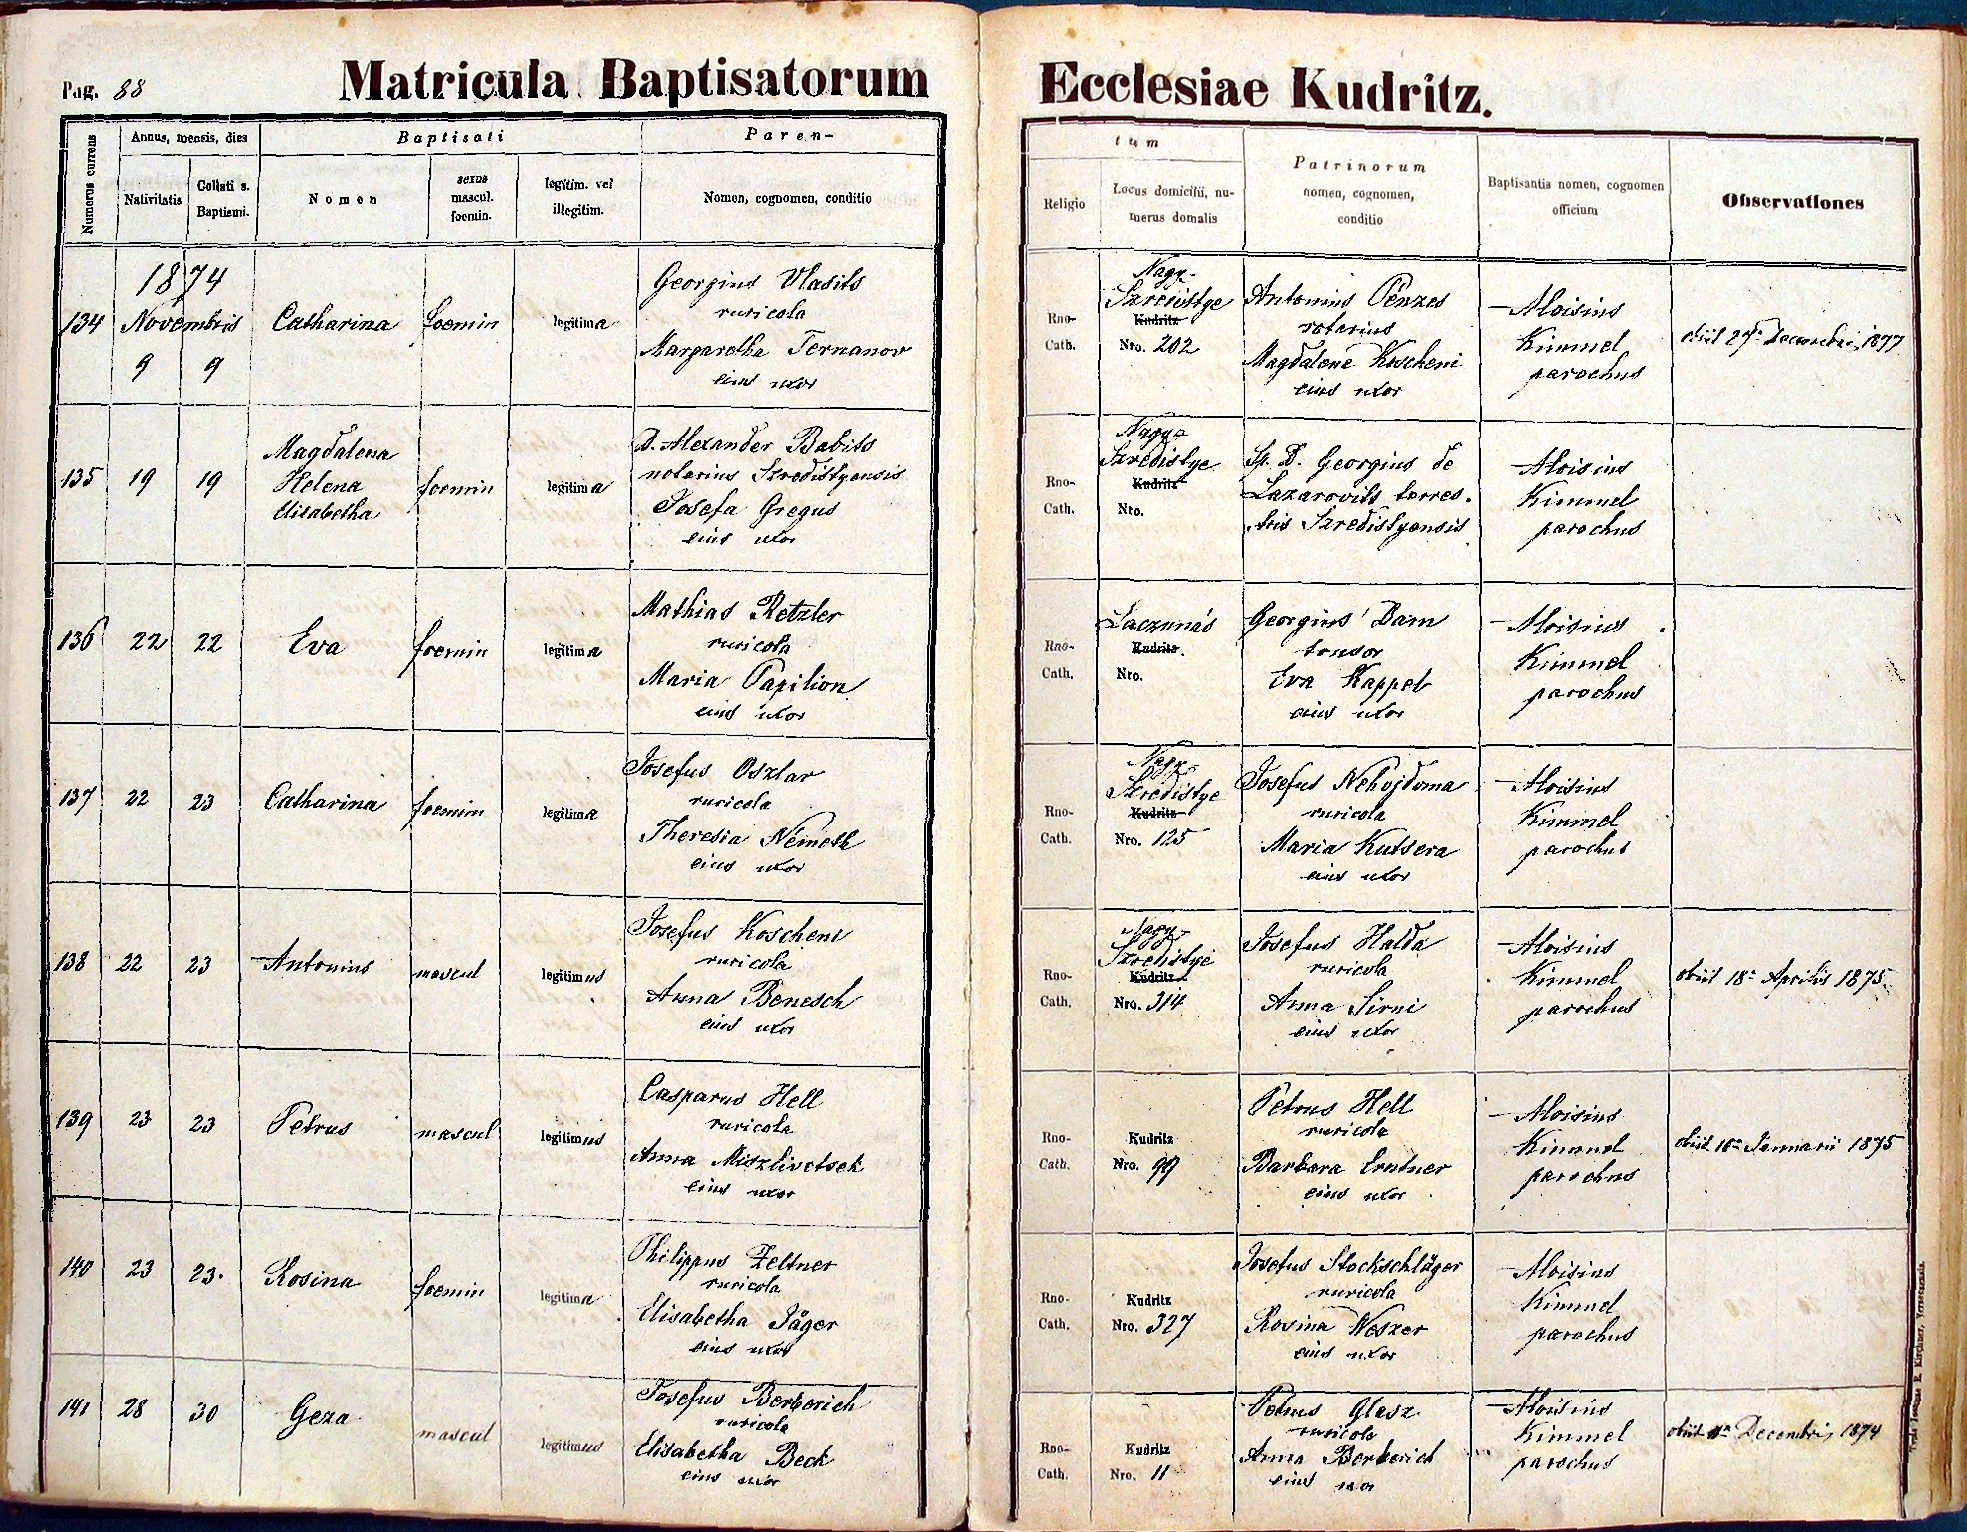 images/church_records/BIRTHS/1884-1899B/1889/088